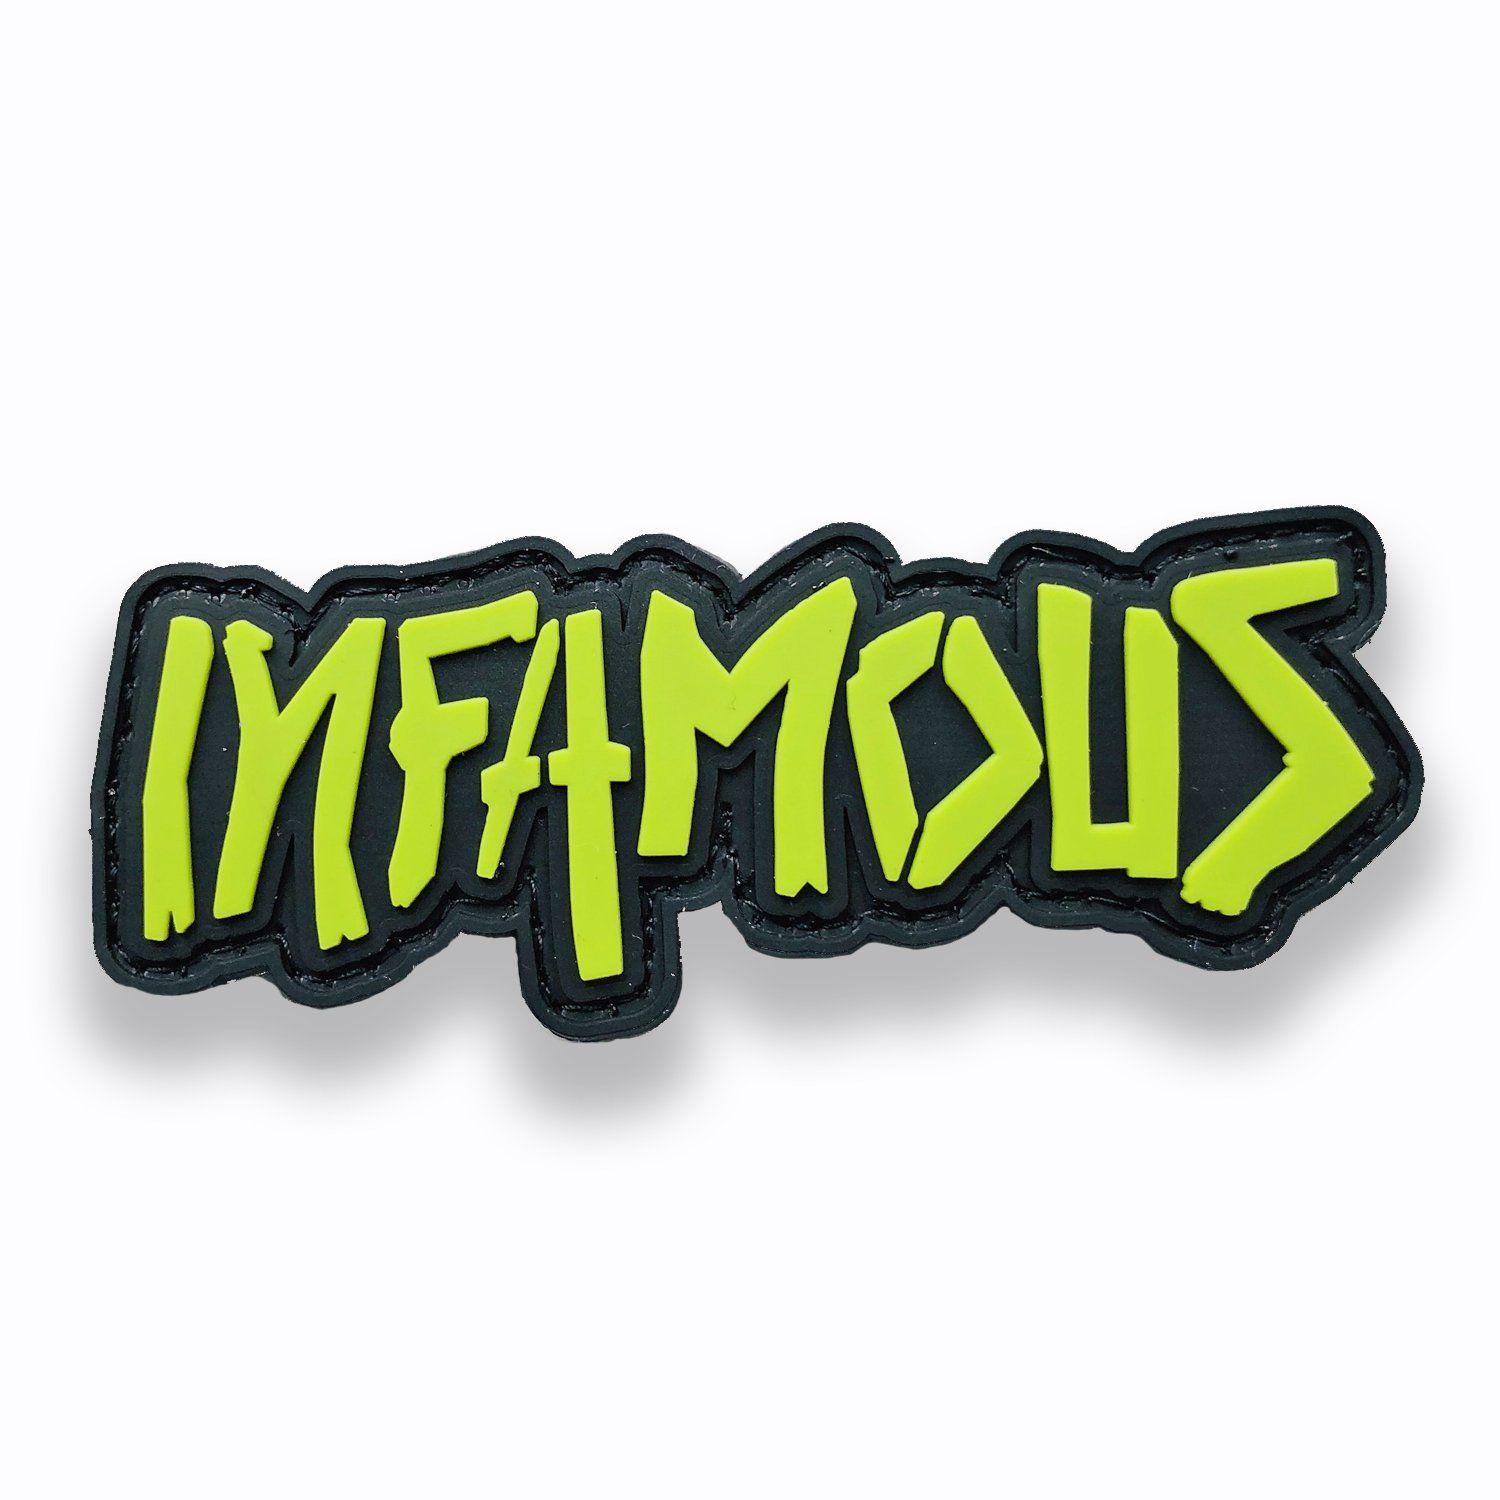 Infamous Logo - Infamous Paintball Logo Patch (3x1.25)